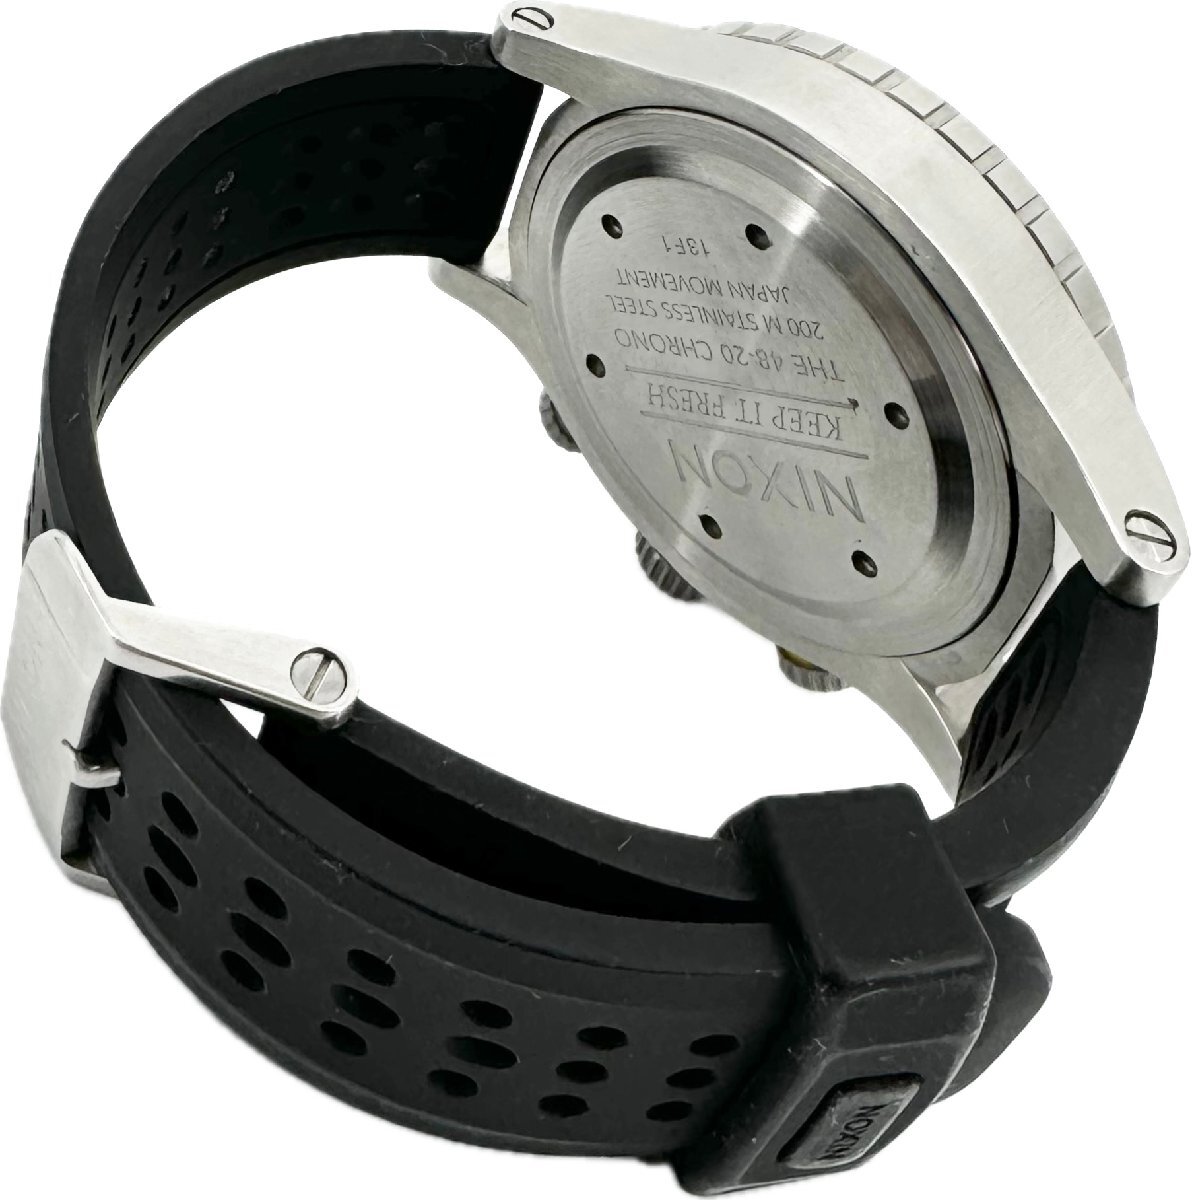 NIXON Nixon [48-20 CHRONO] men's quartz analogue chronograph Date stainless steel rubber belt wristwatch black face operation goods 